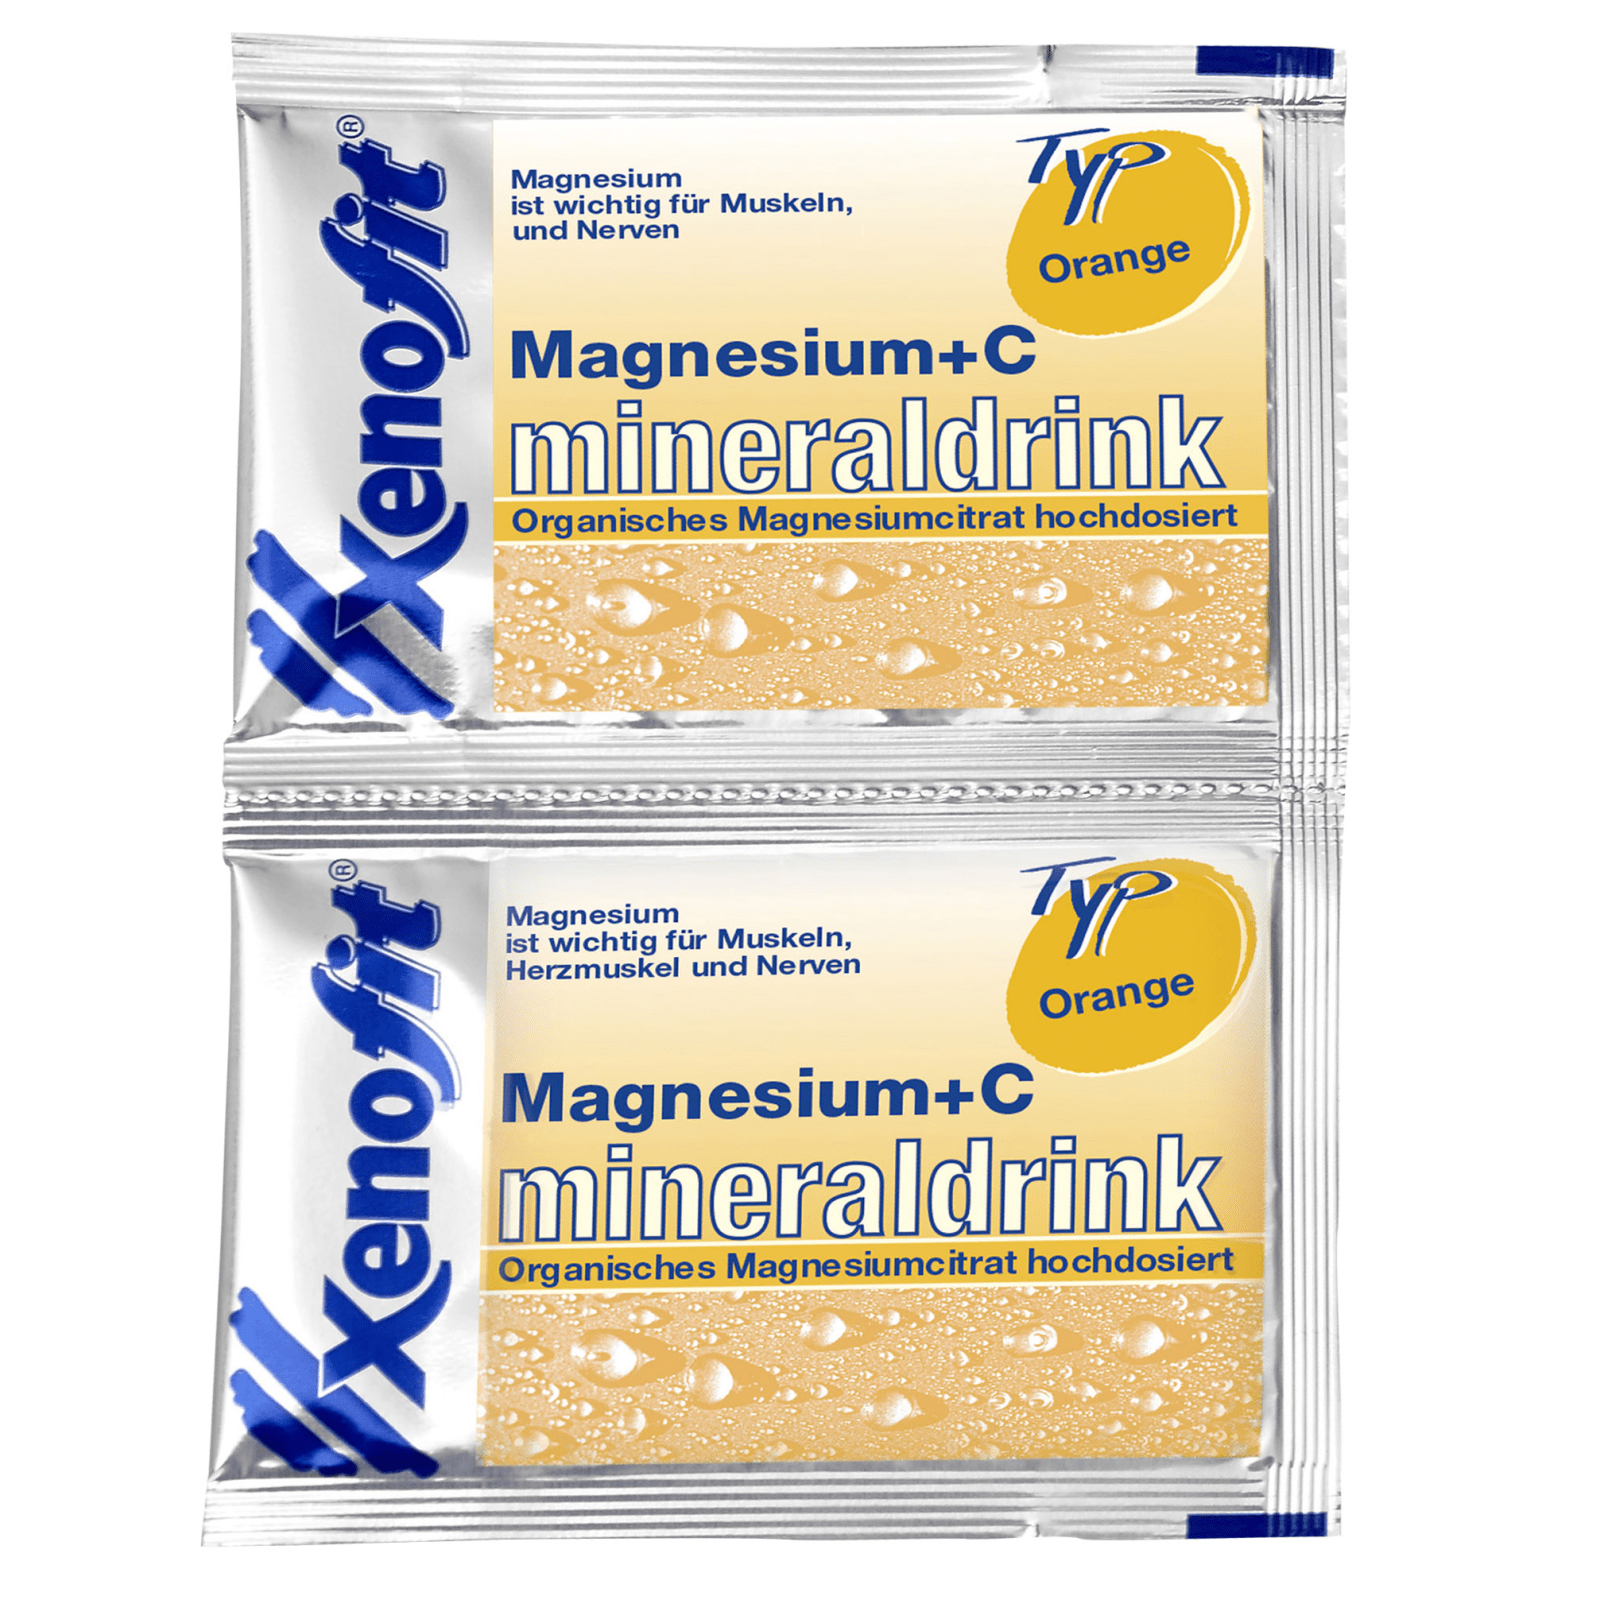 Pelmel Bewust ZuidAmerika Magnesium + Vitamin C (20x4g) van Xenofit kopen | Bodylab Shop